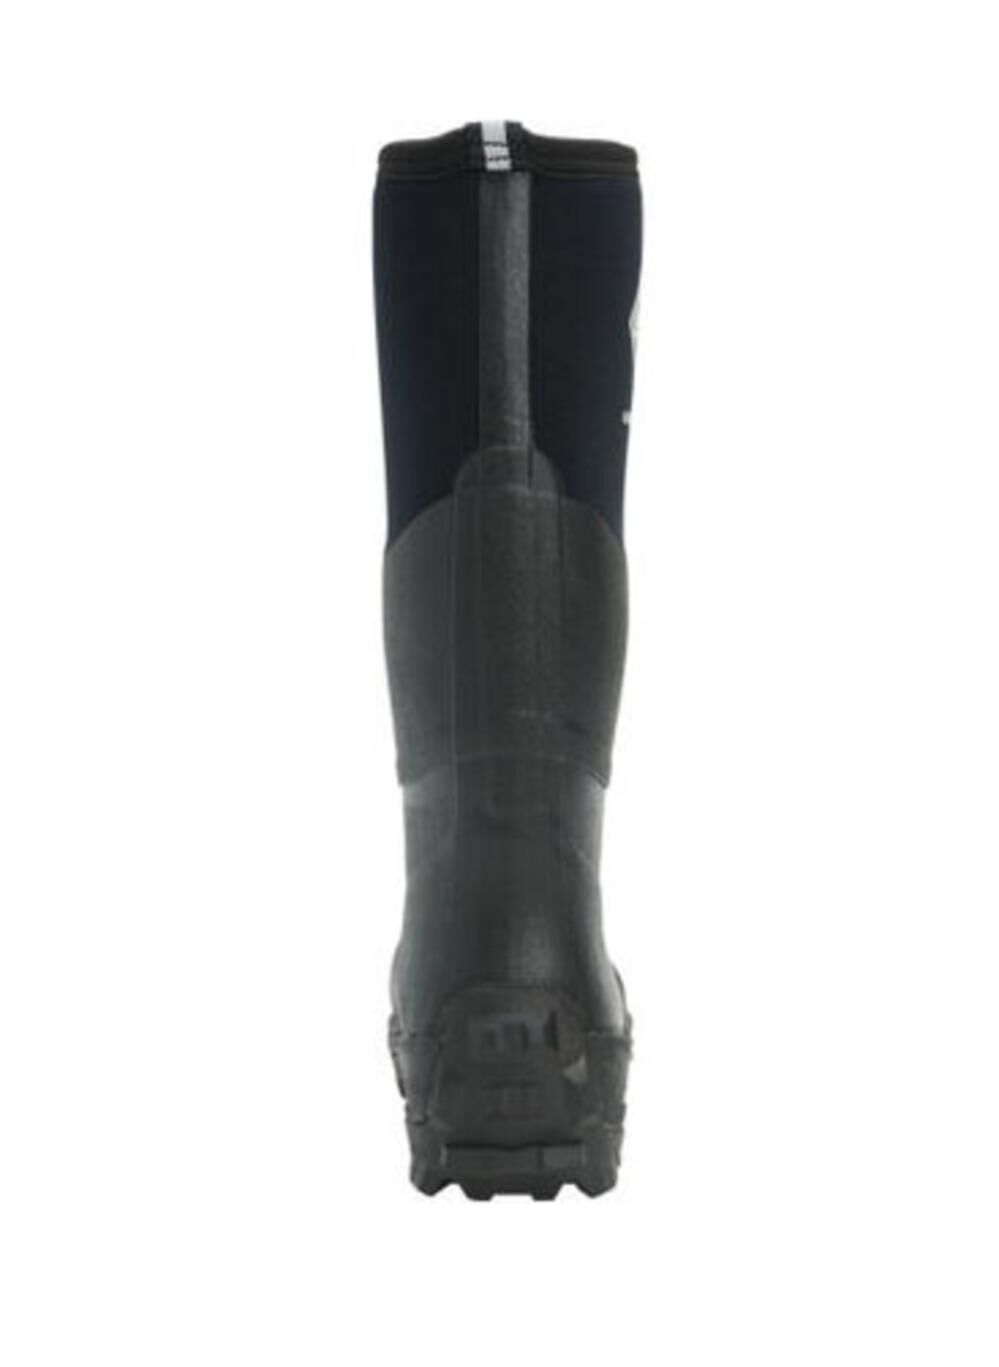 Boots Mens Muckmaster Tall Black Boots Size 13 MMH-500A-BL-130